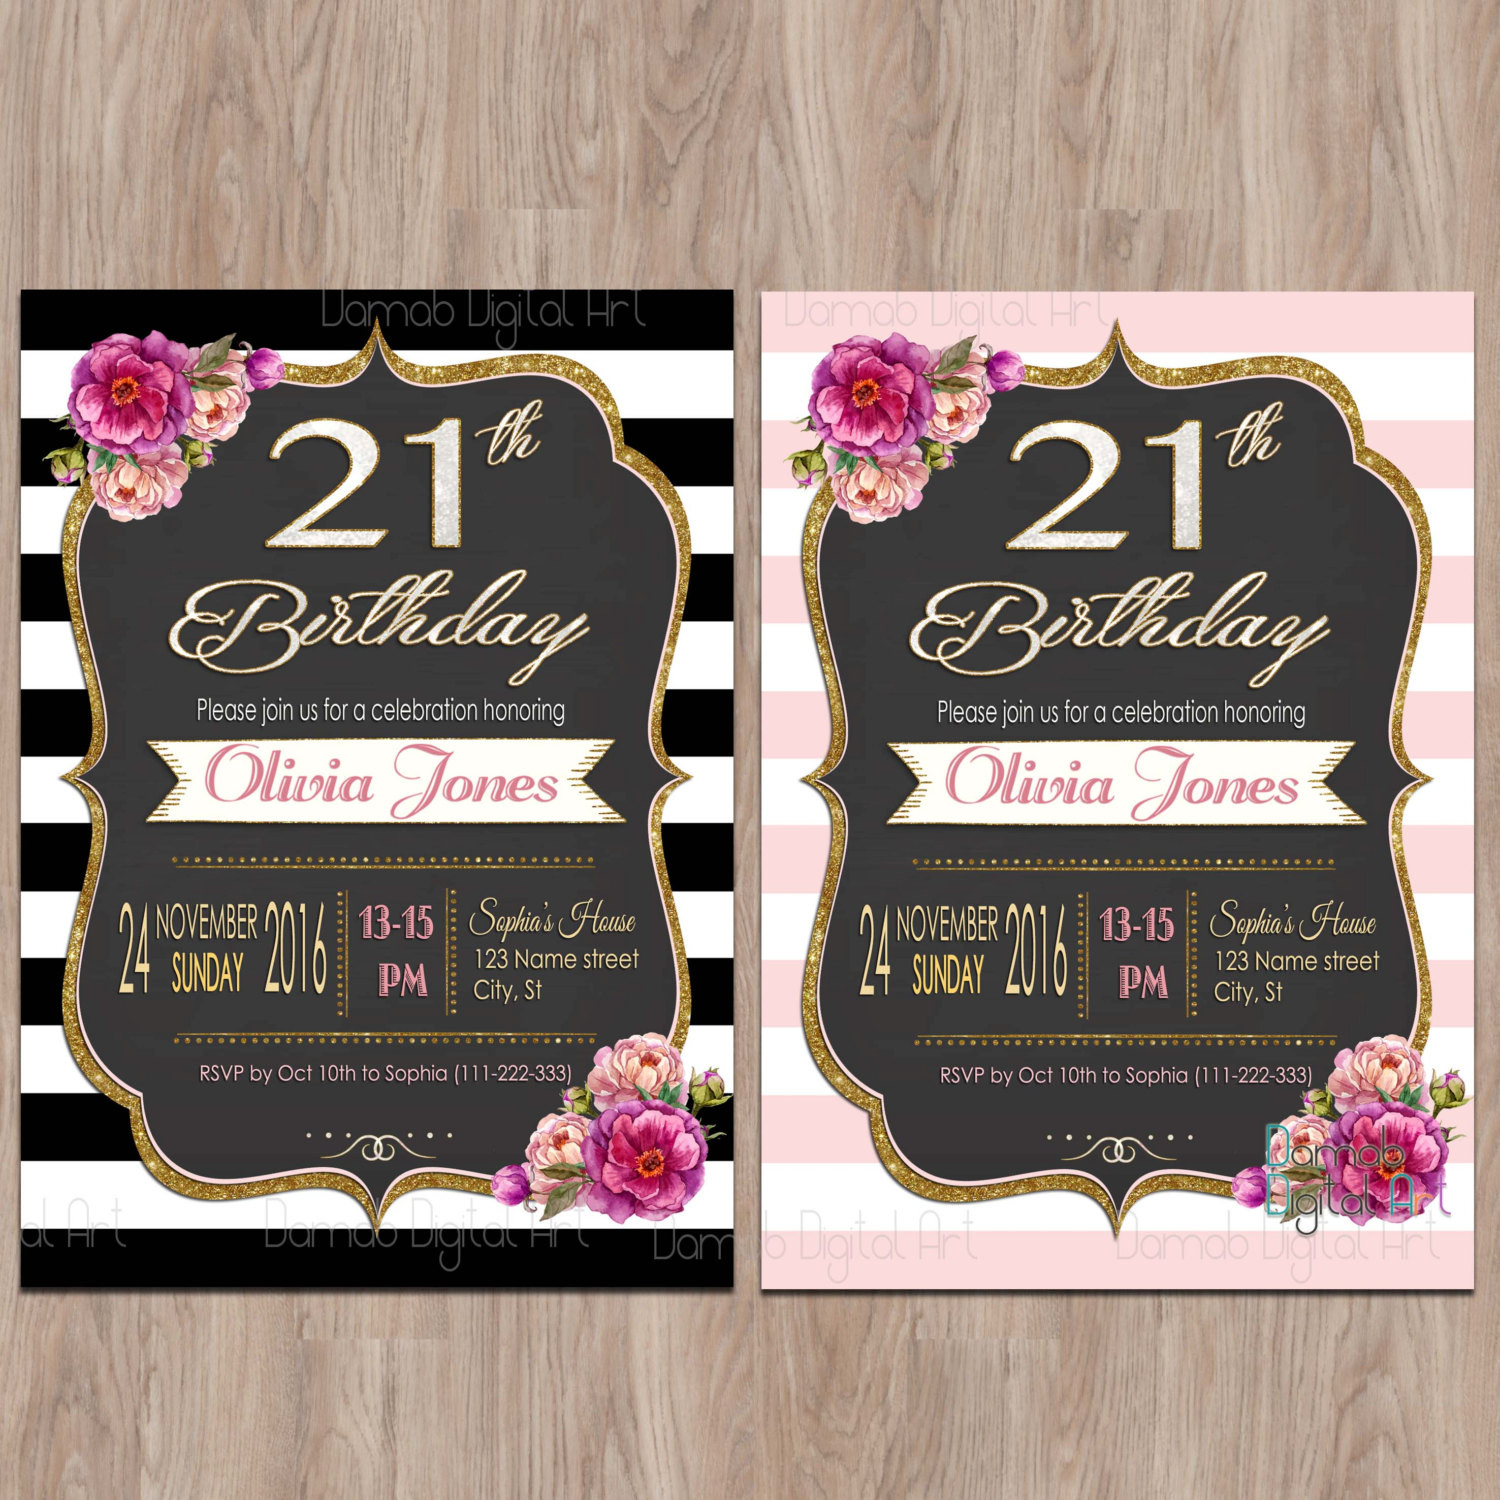 Best ideas about 21st Birthday Party Invitations
. Save or Pin 21st birthday invitations 21 birthday invitations Twenty Now.